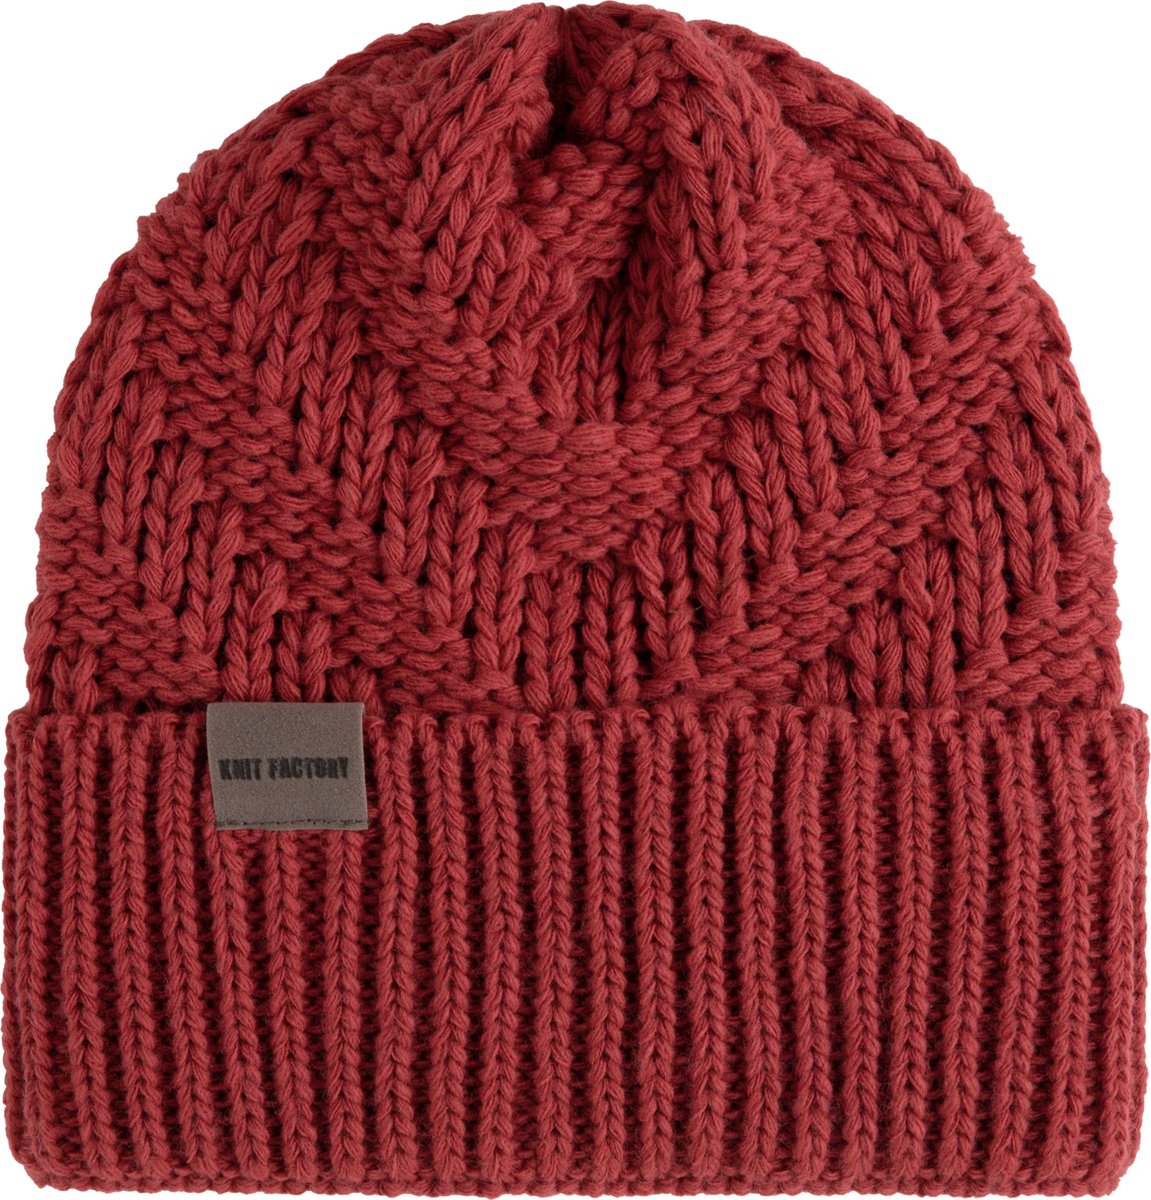 Knit Factory Sally Gebreide Muts Heren & Dames - Beanie hat - Baked Apple - Grofgebreid - Warme rode Wintermuts - Unisex - One Size